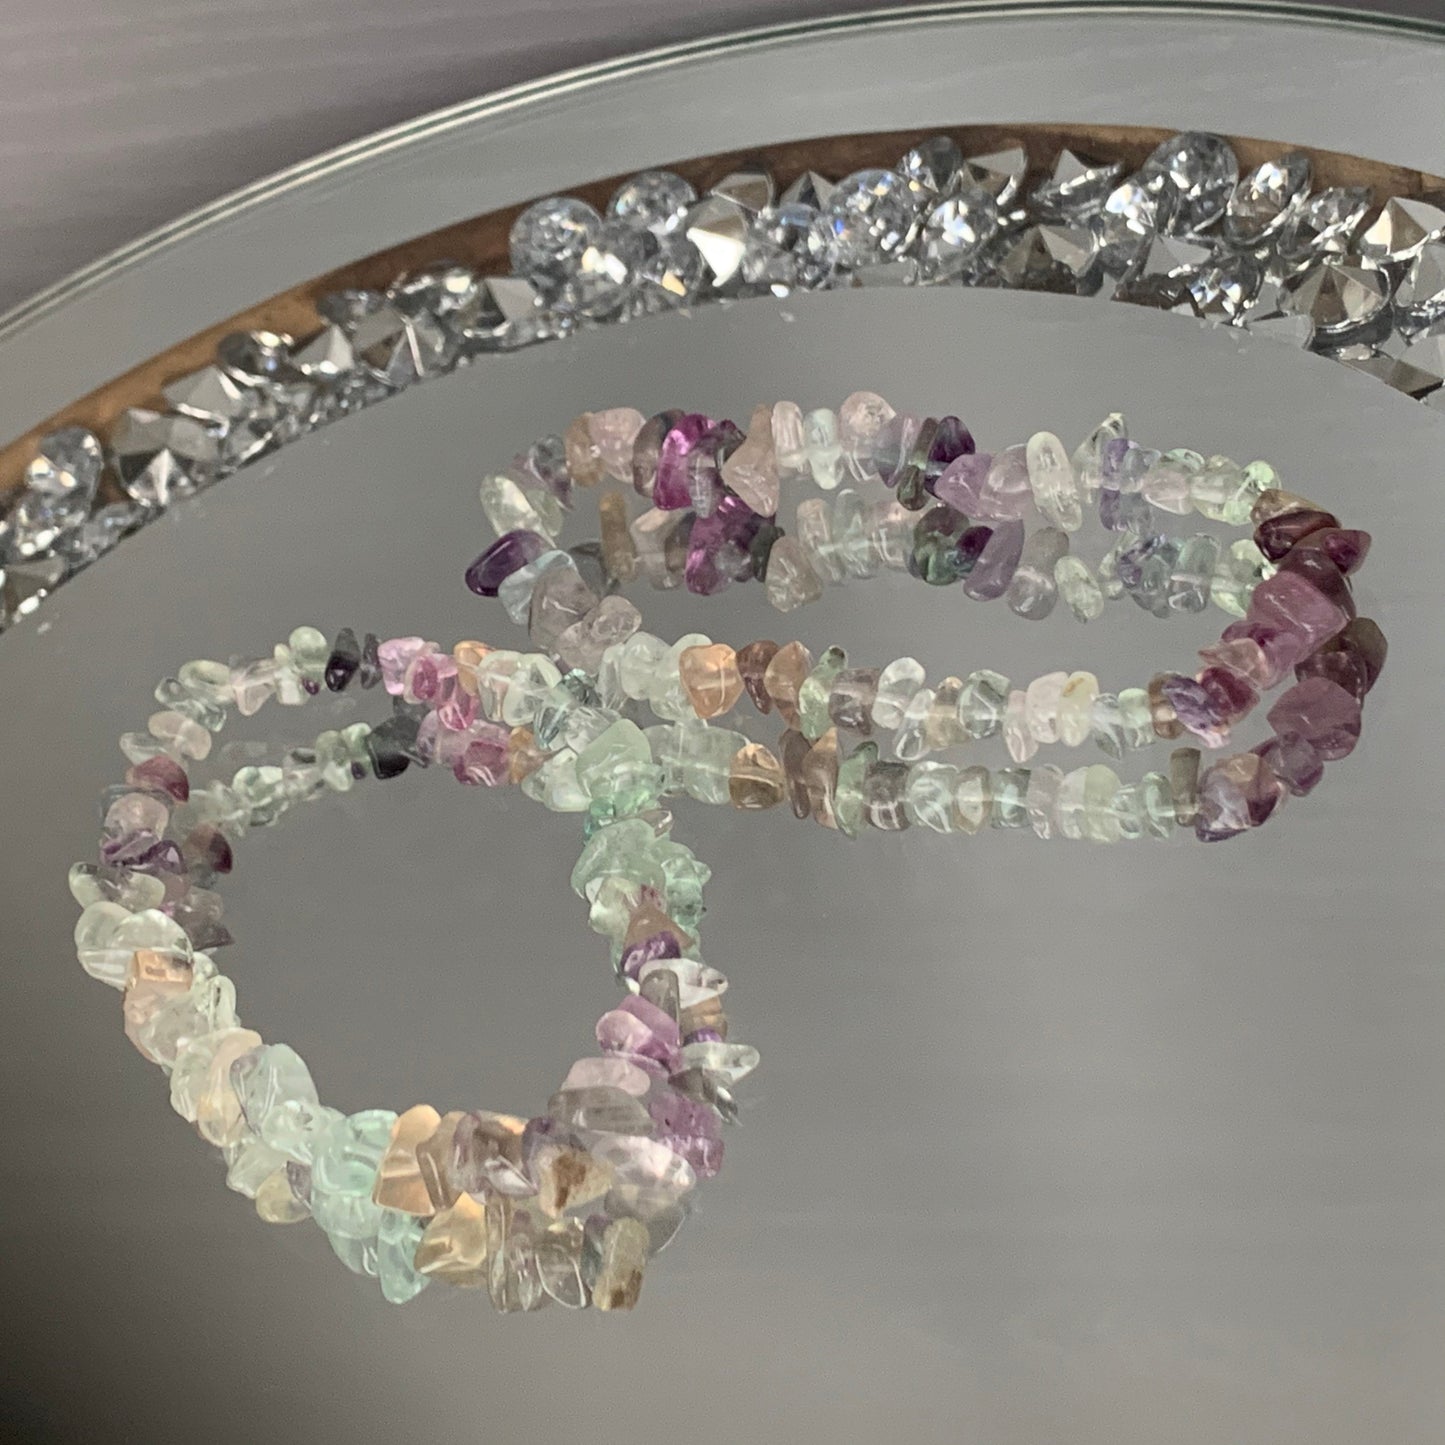 Rainbow Fluorite rough crystal gemstone stretch bracelet